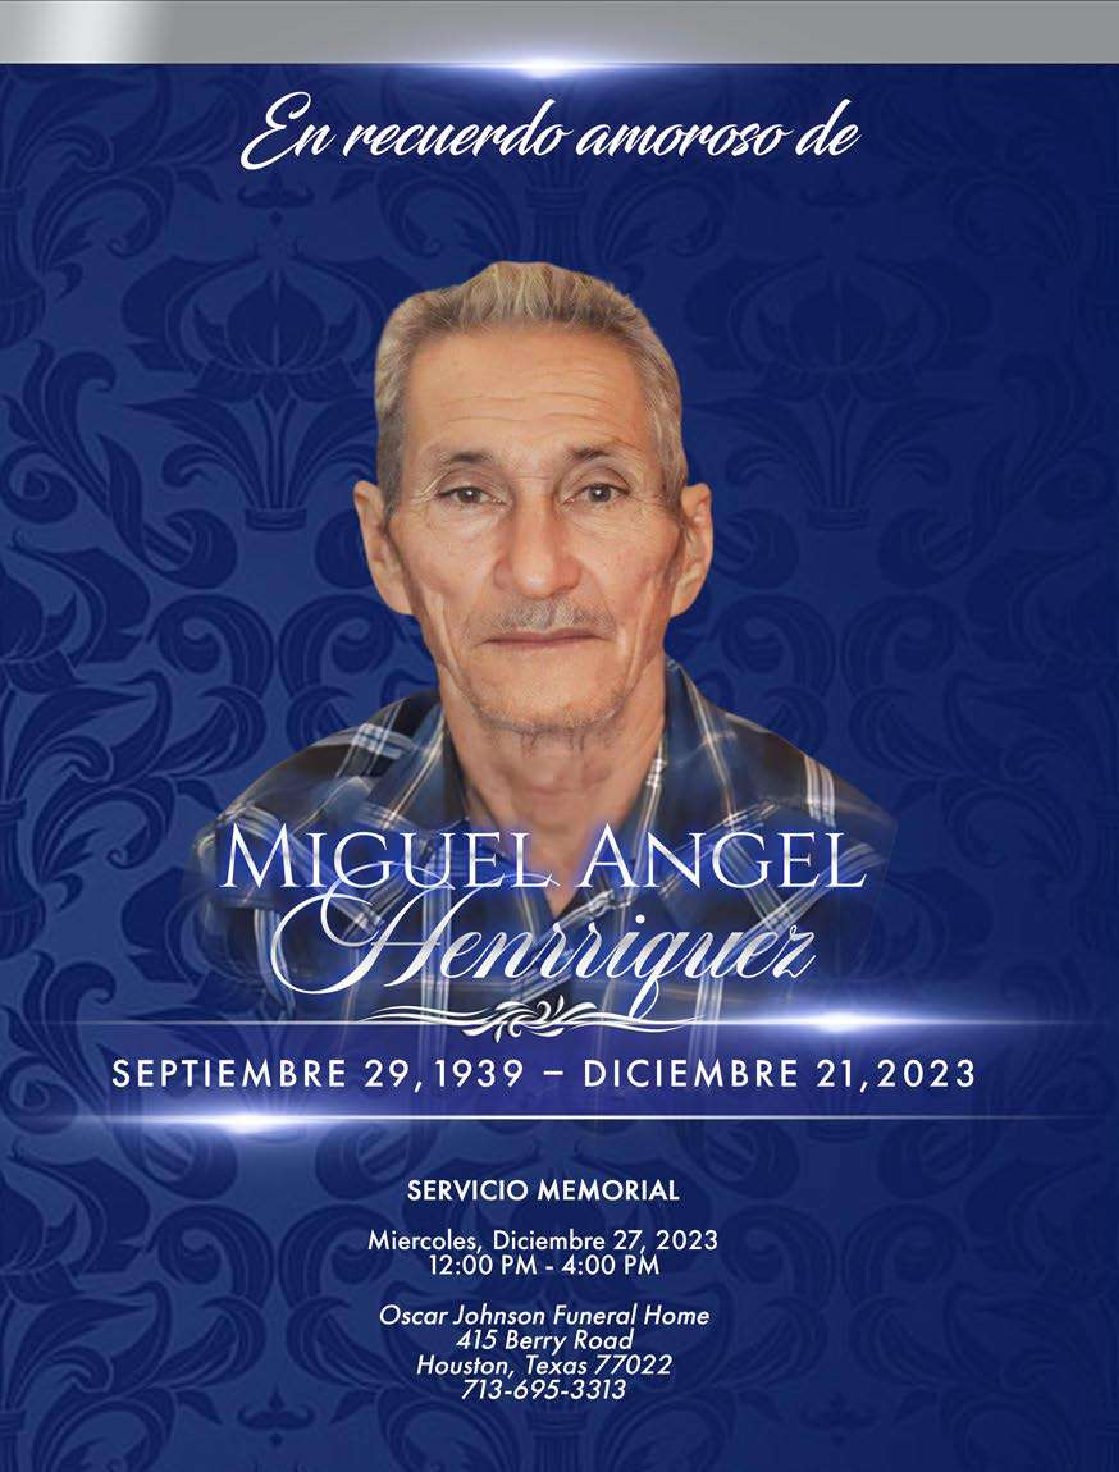 Miguel Angel Henrriquez 1939 – 2023